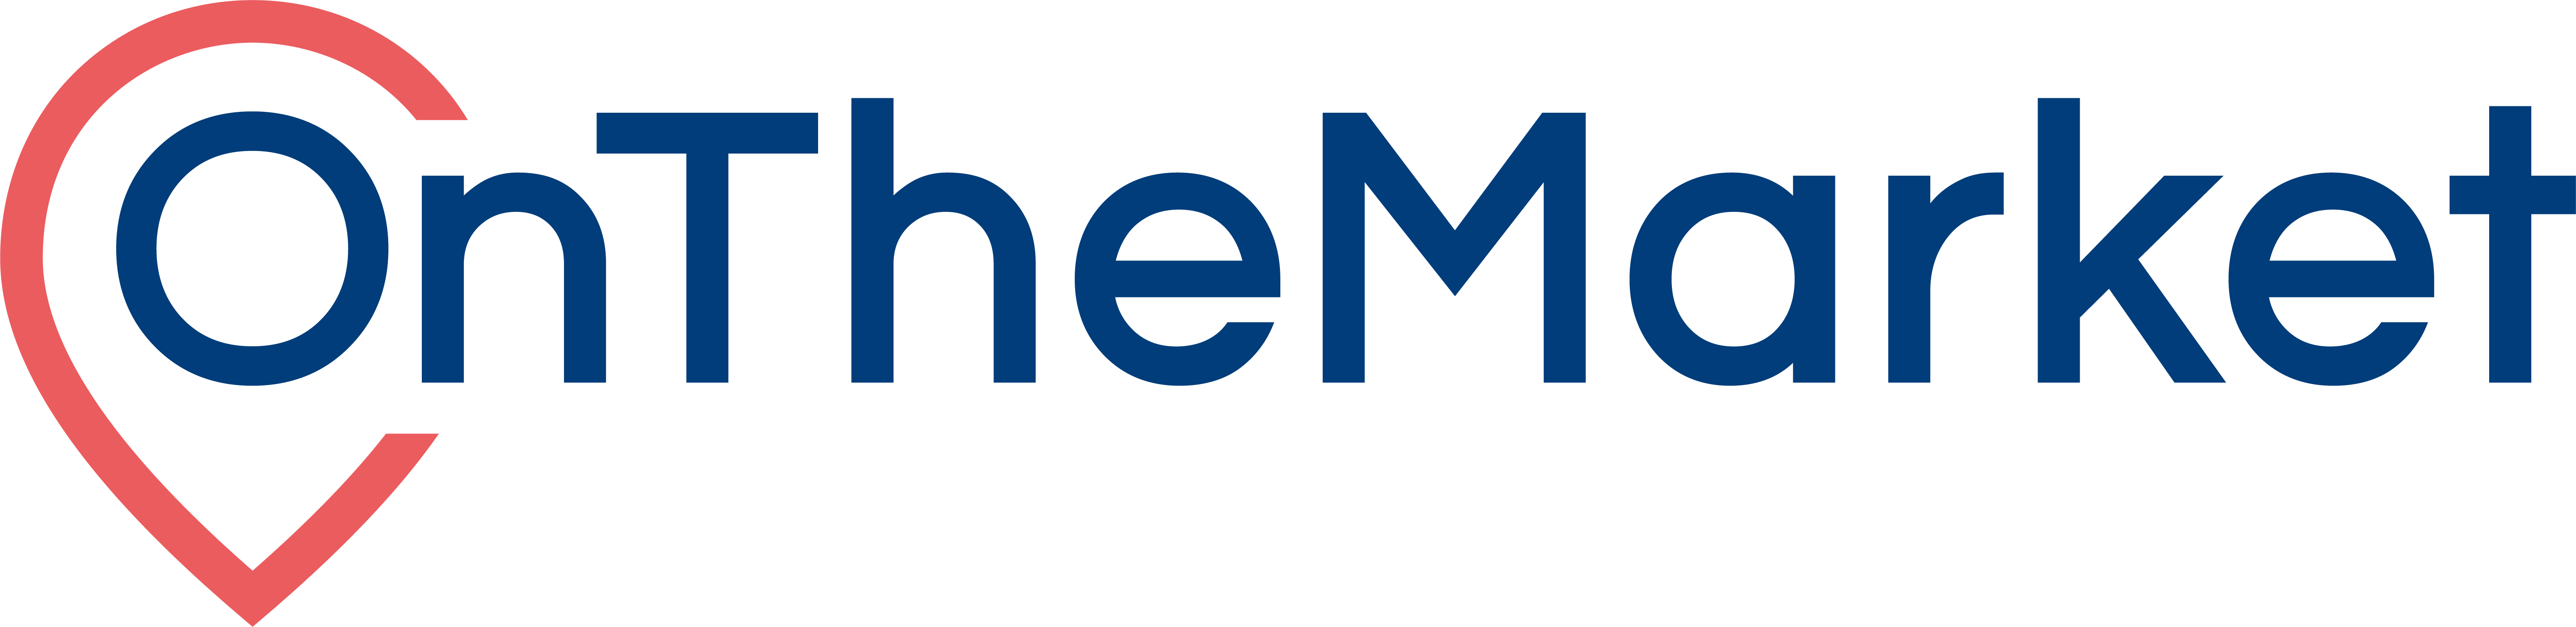 msn logo 